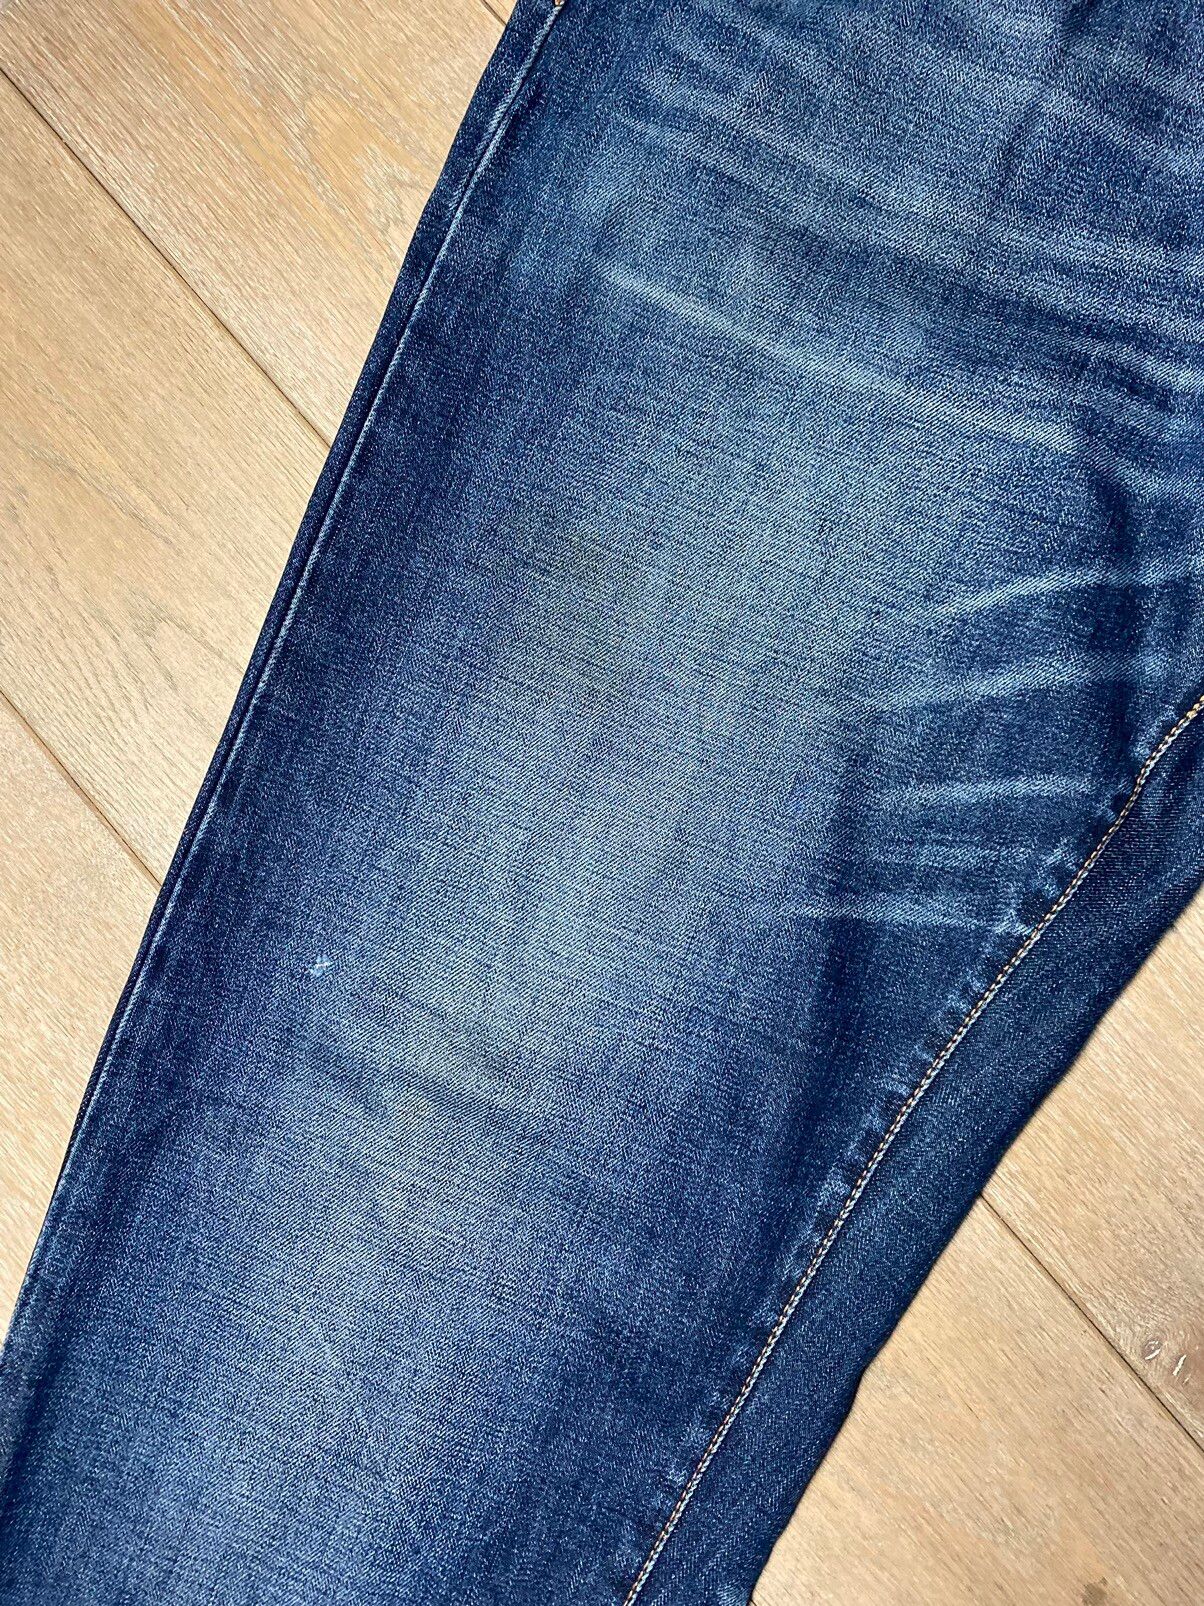 Vintage Evisu Japan vintage blue jeans denim pants big seagull logo Size US 38 / EU 54 - 9 Thumbnail